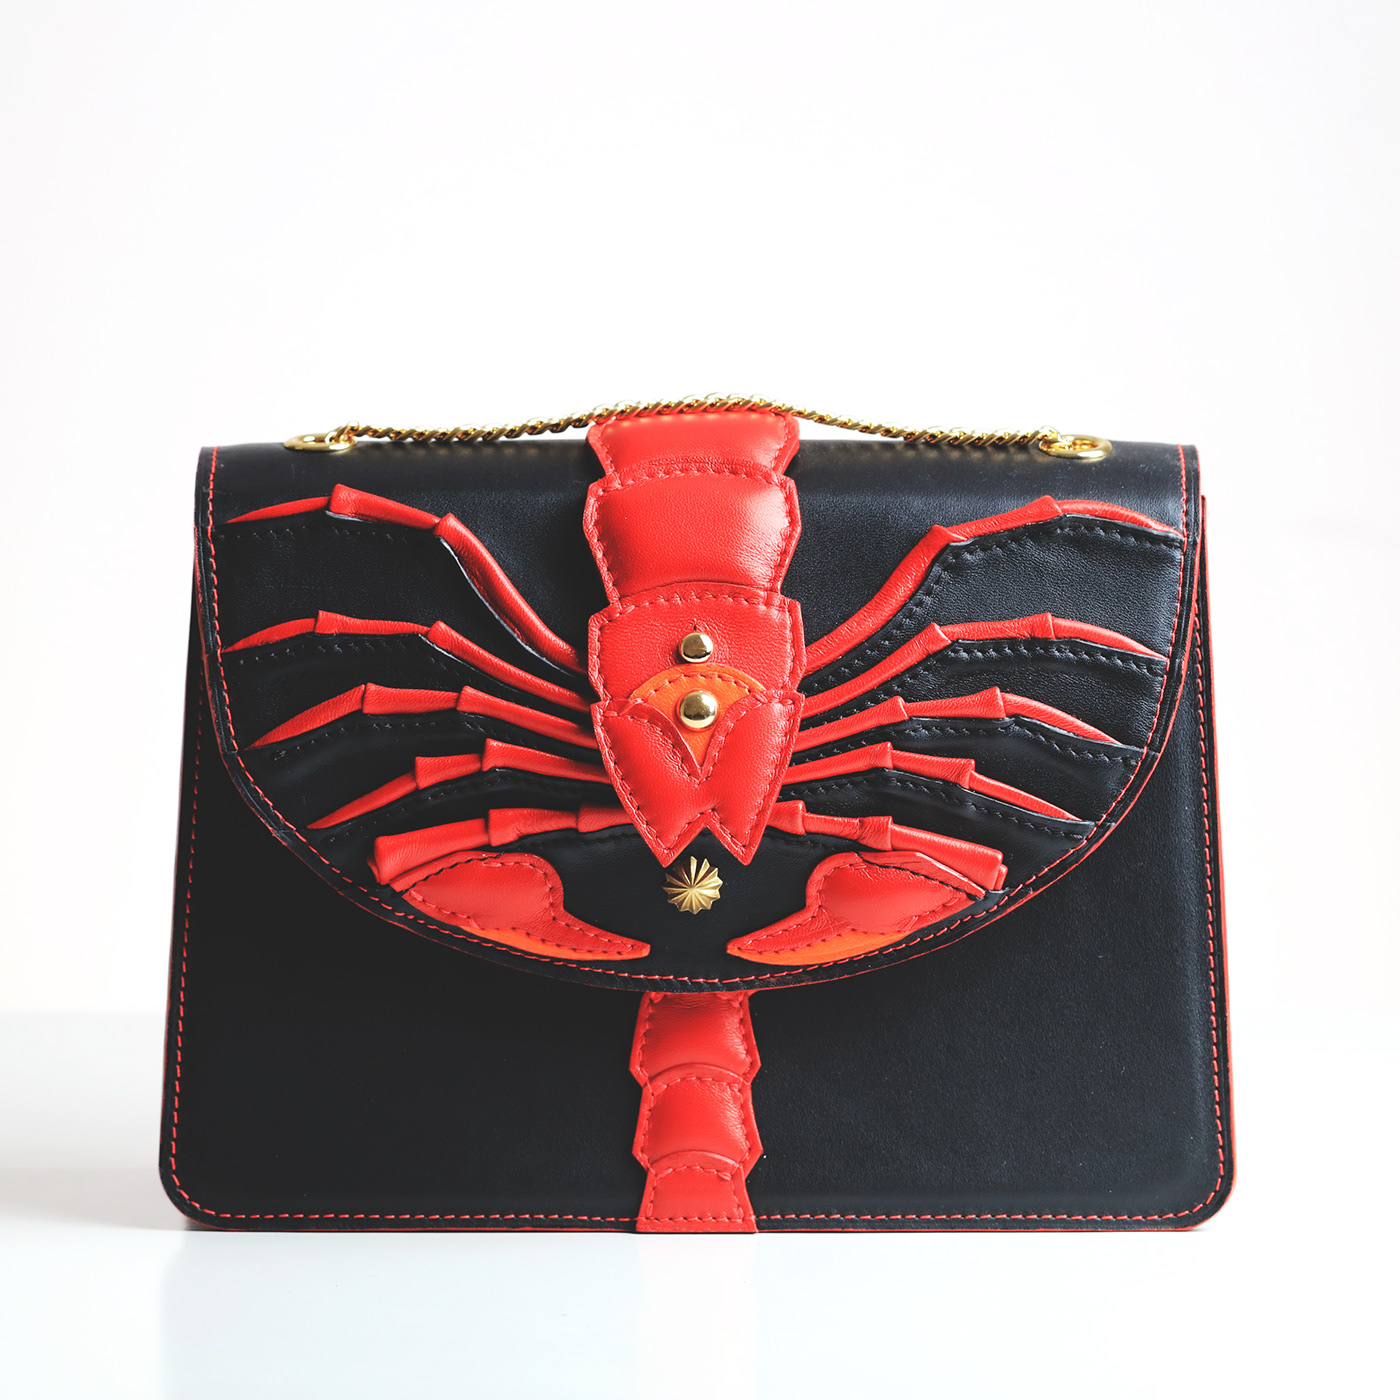 scorpio constellatoin scorpion shoulderbag fashioneditoral fashionaccessory handbag leathergoods leathercrafts australiandesign